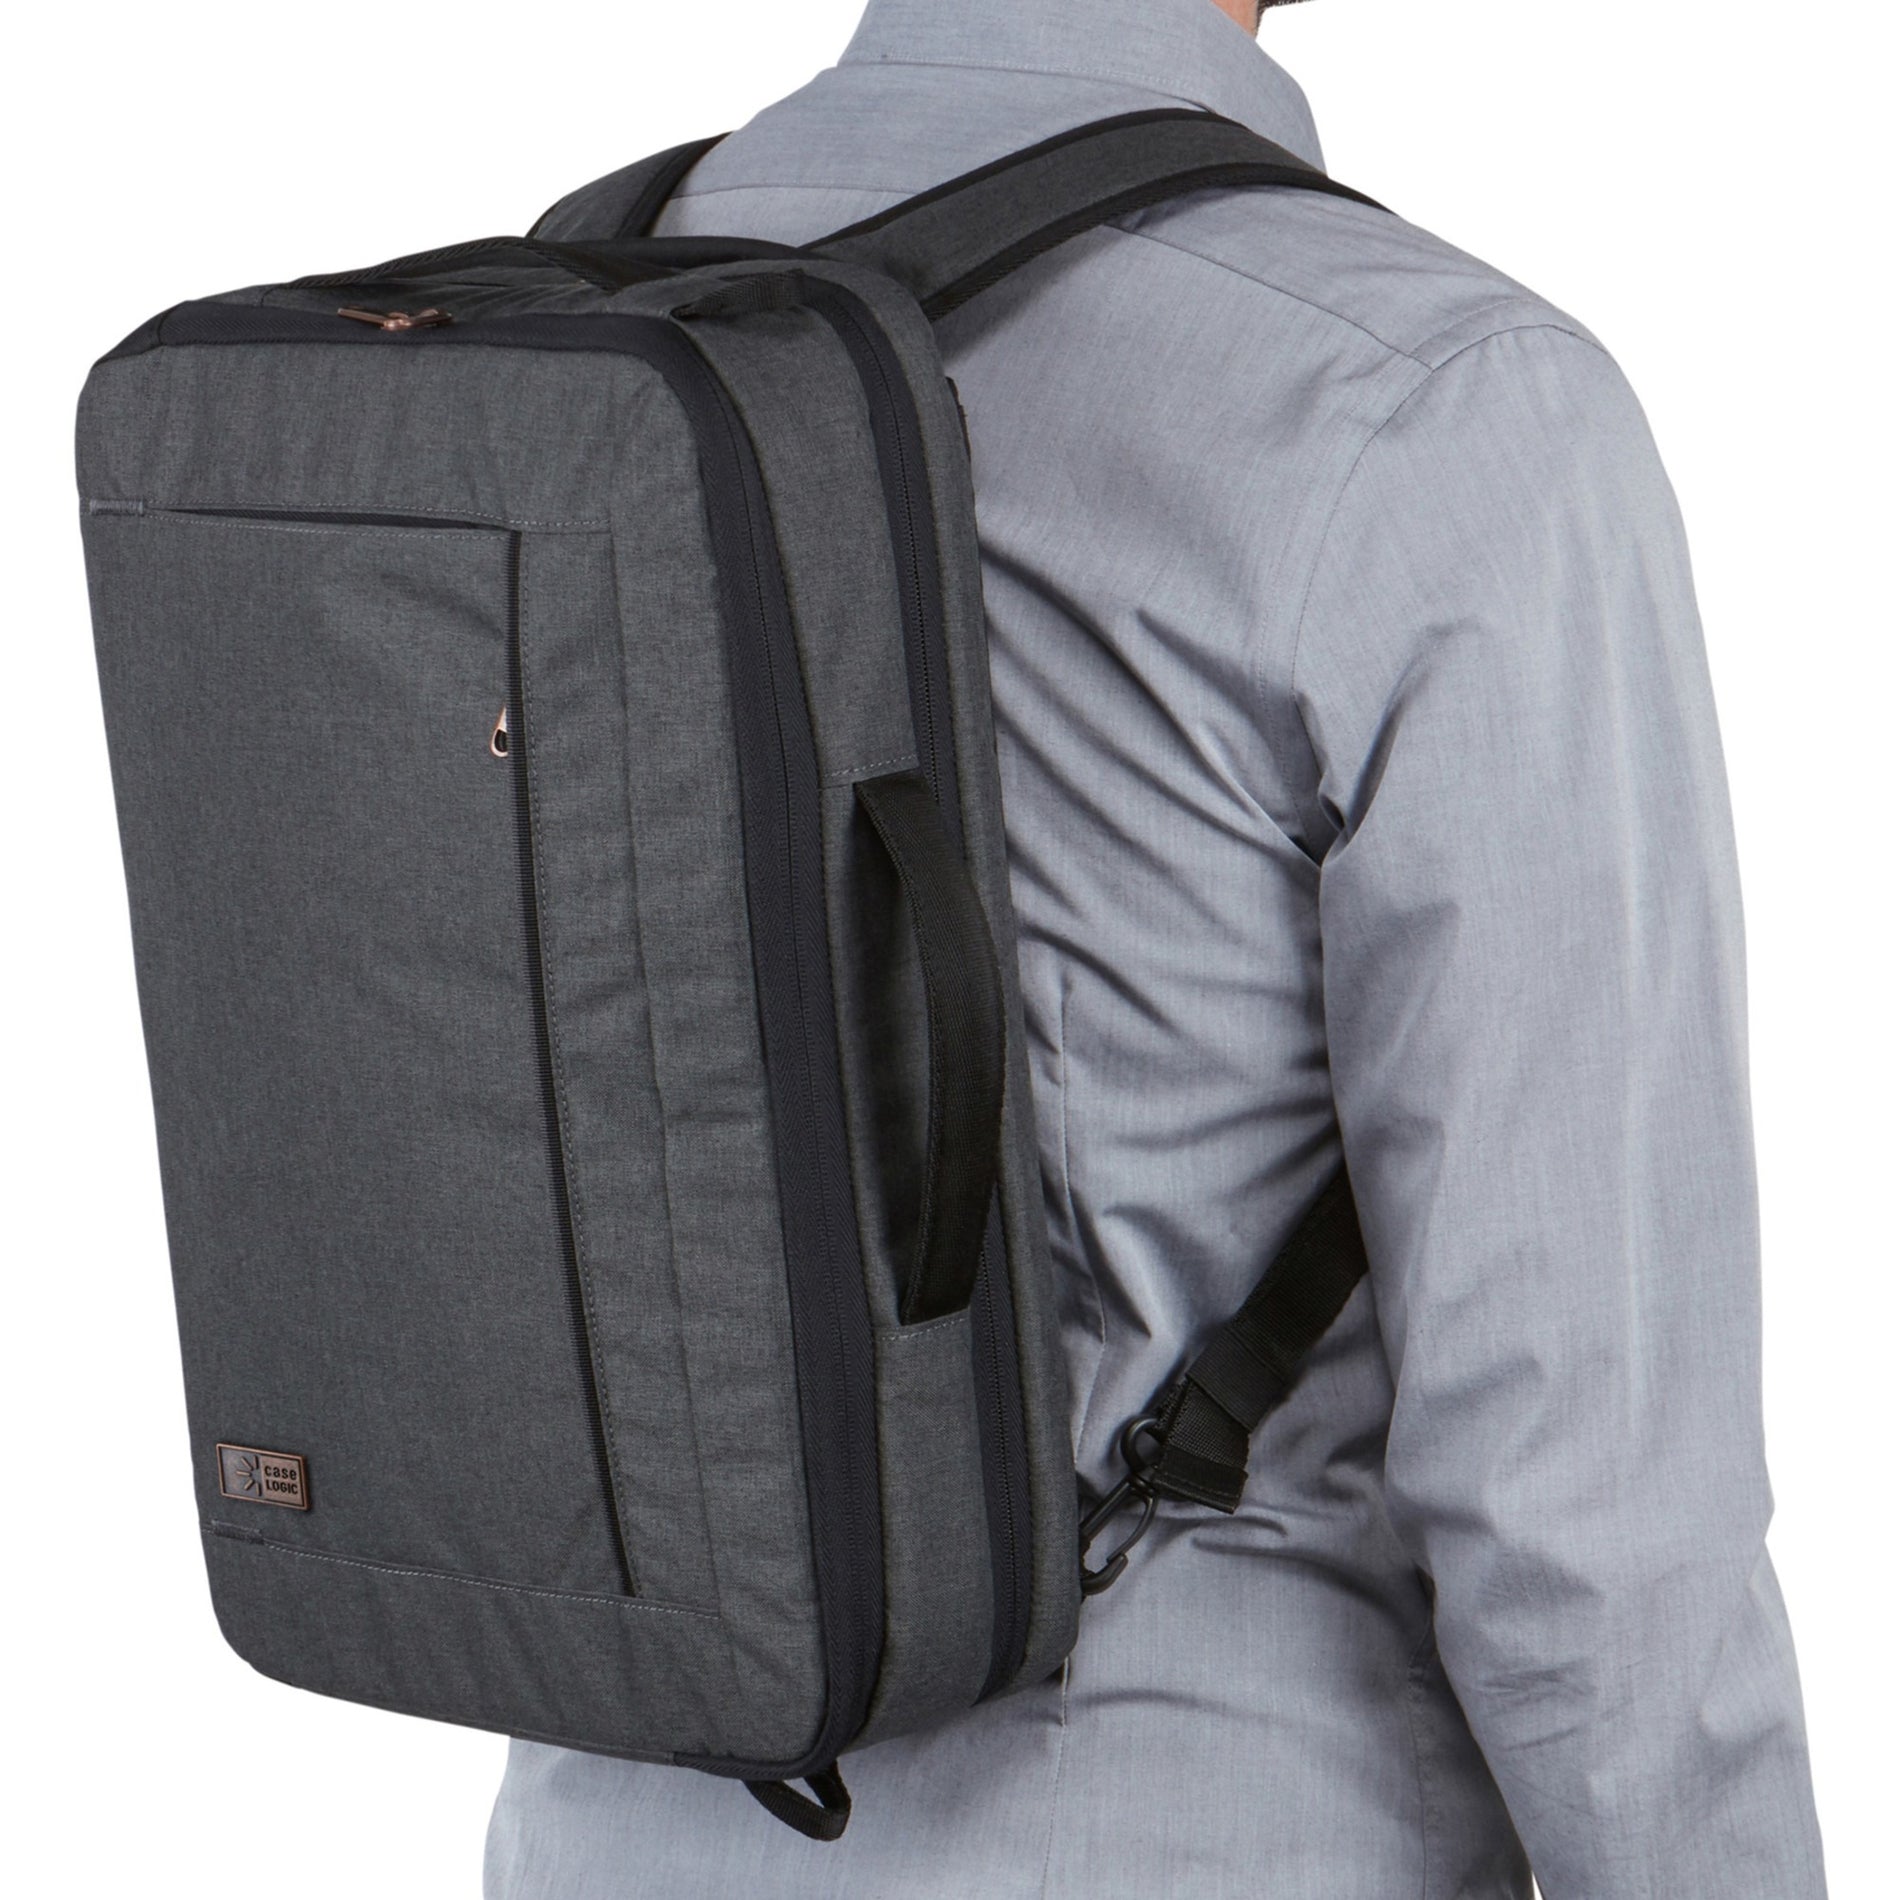 Case Logic 3203698 Era 15.6" 2-1 Backpack, Obsidian, Limited Warranty 25 Year